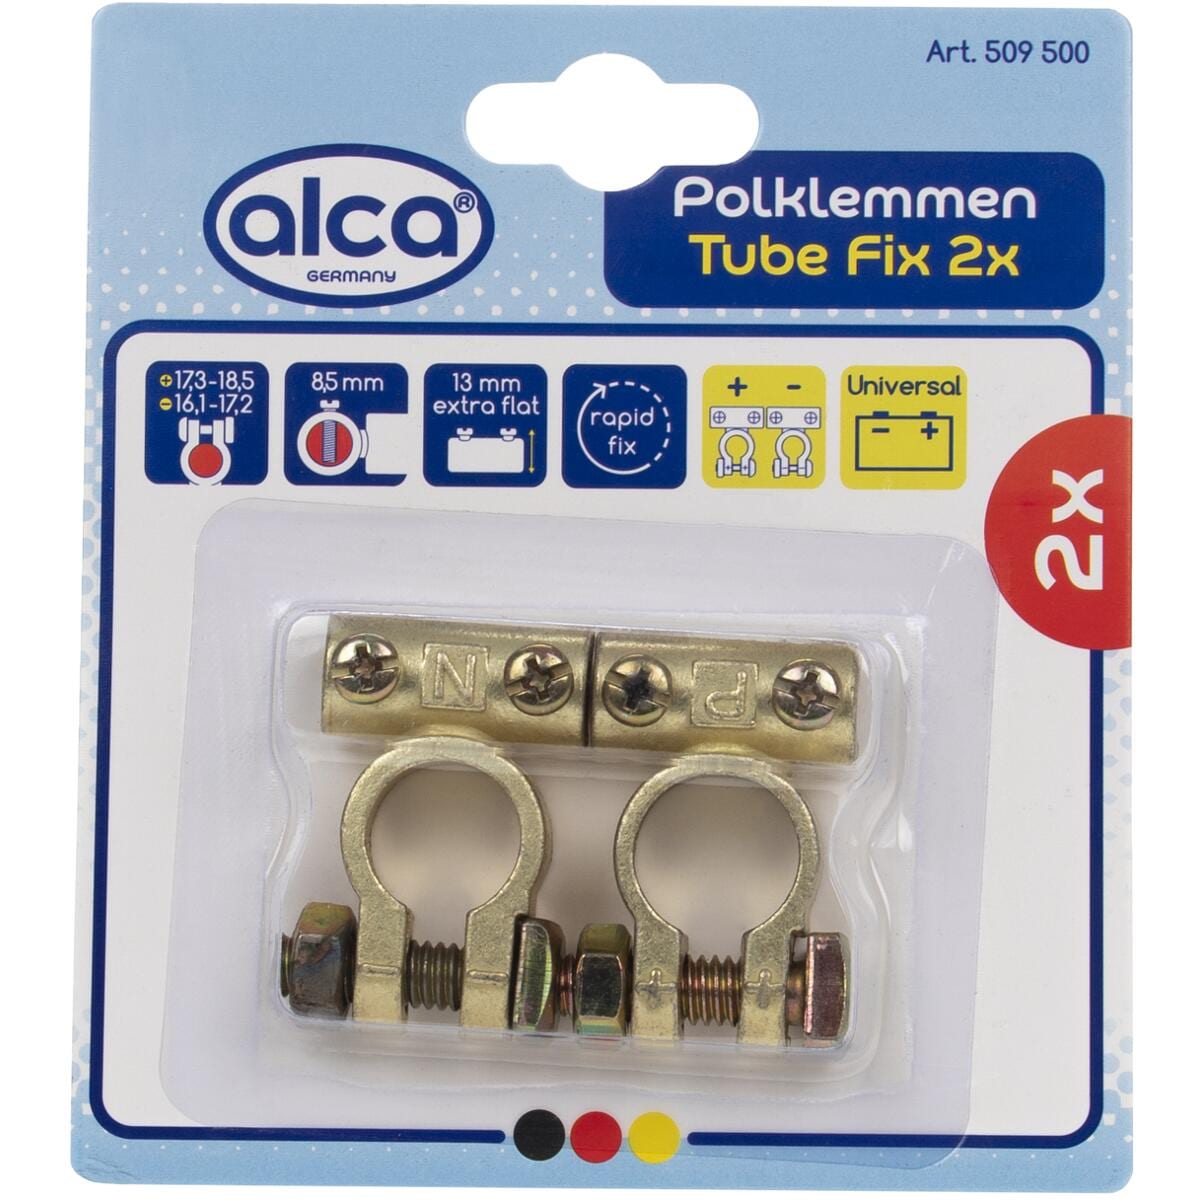 Alca Tube Fix Batterie-Polklemmen, für Kabelquerschnitt bis 50 mm²